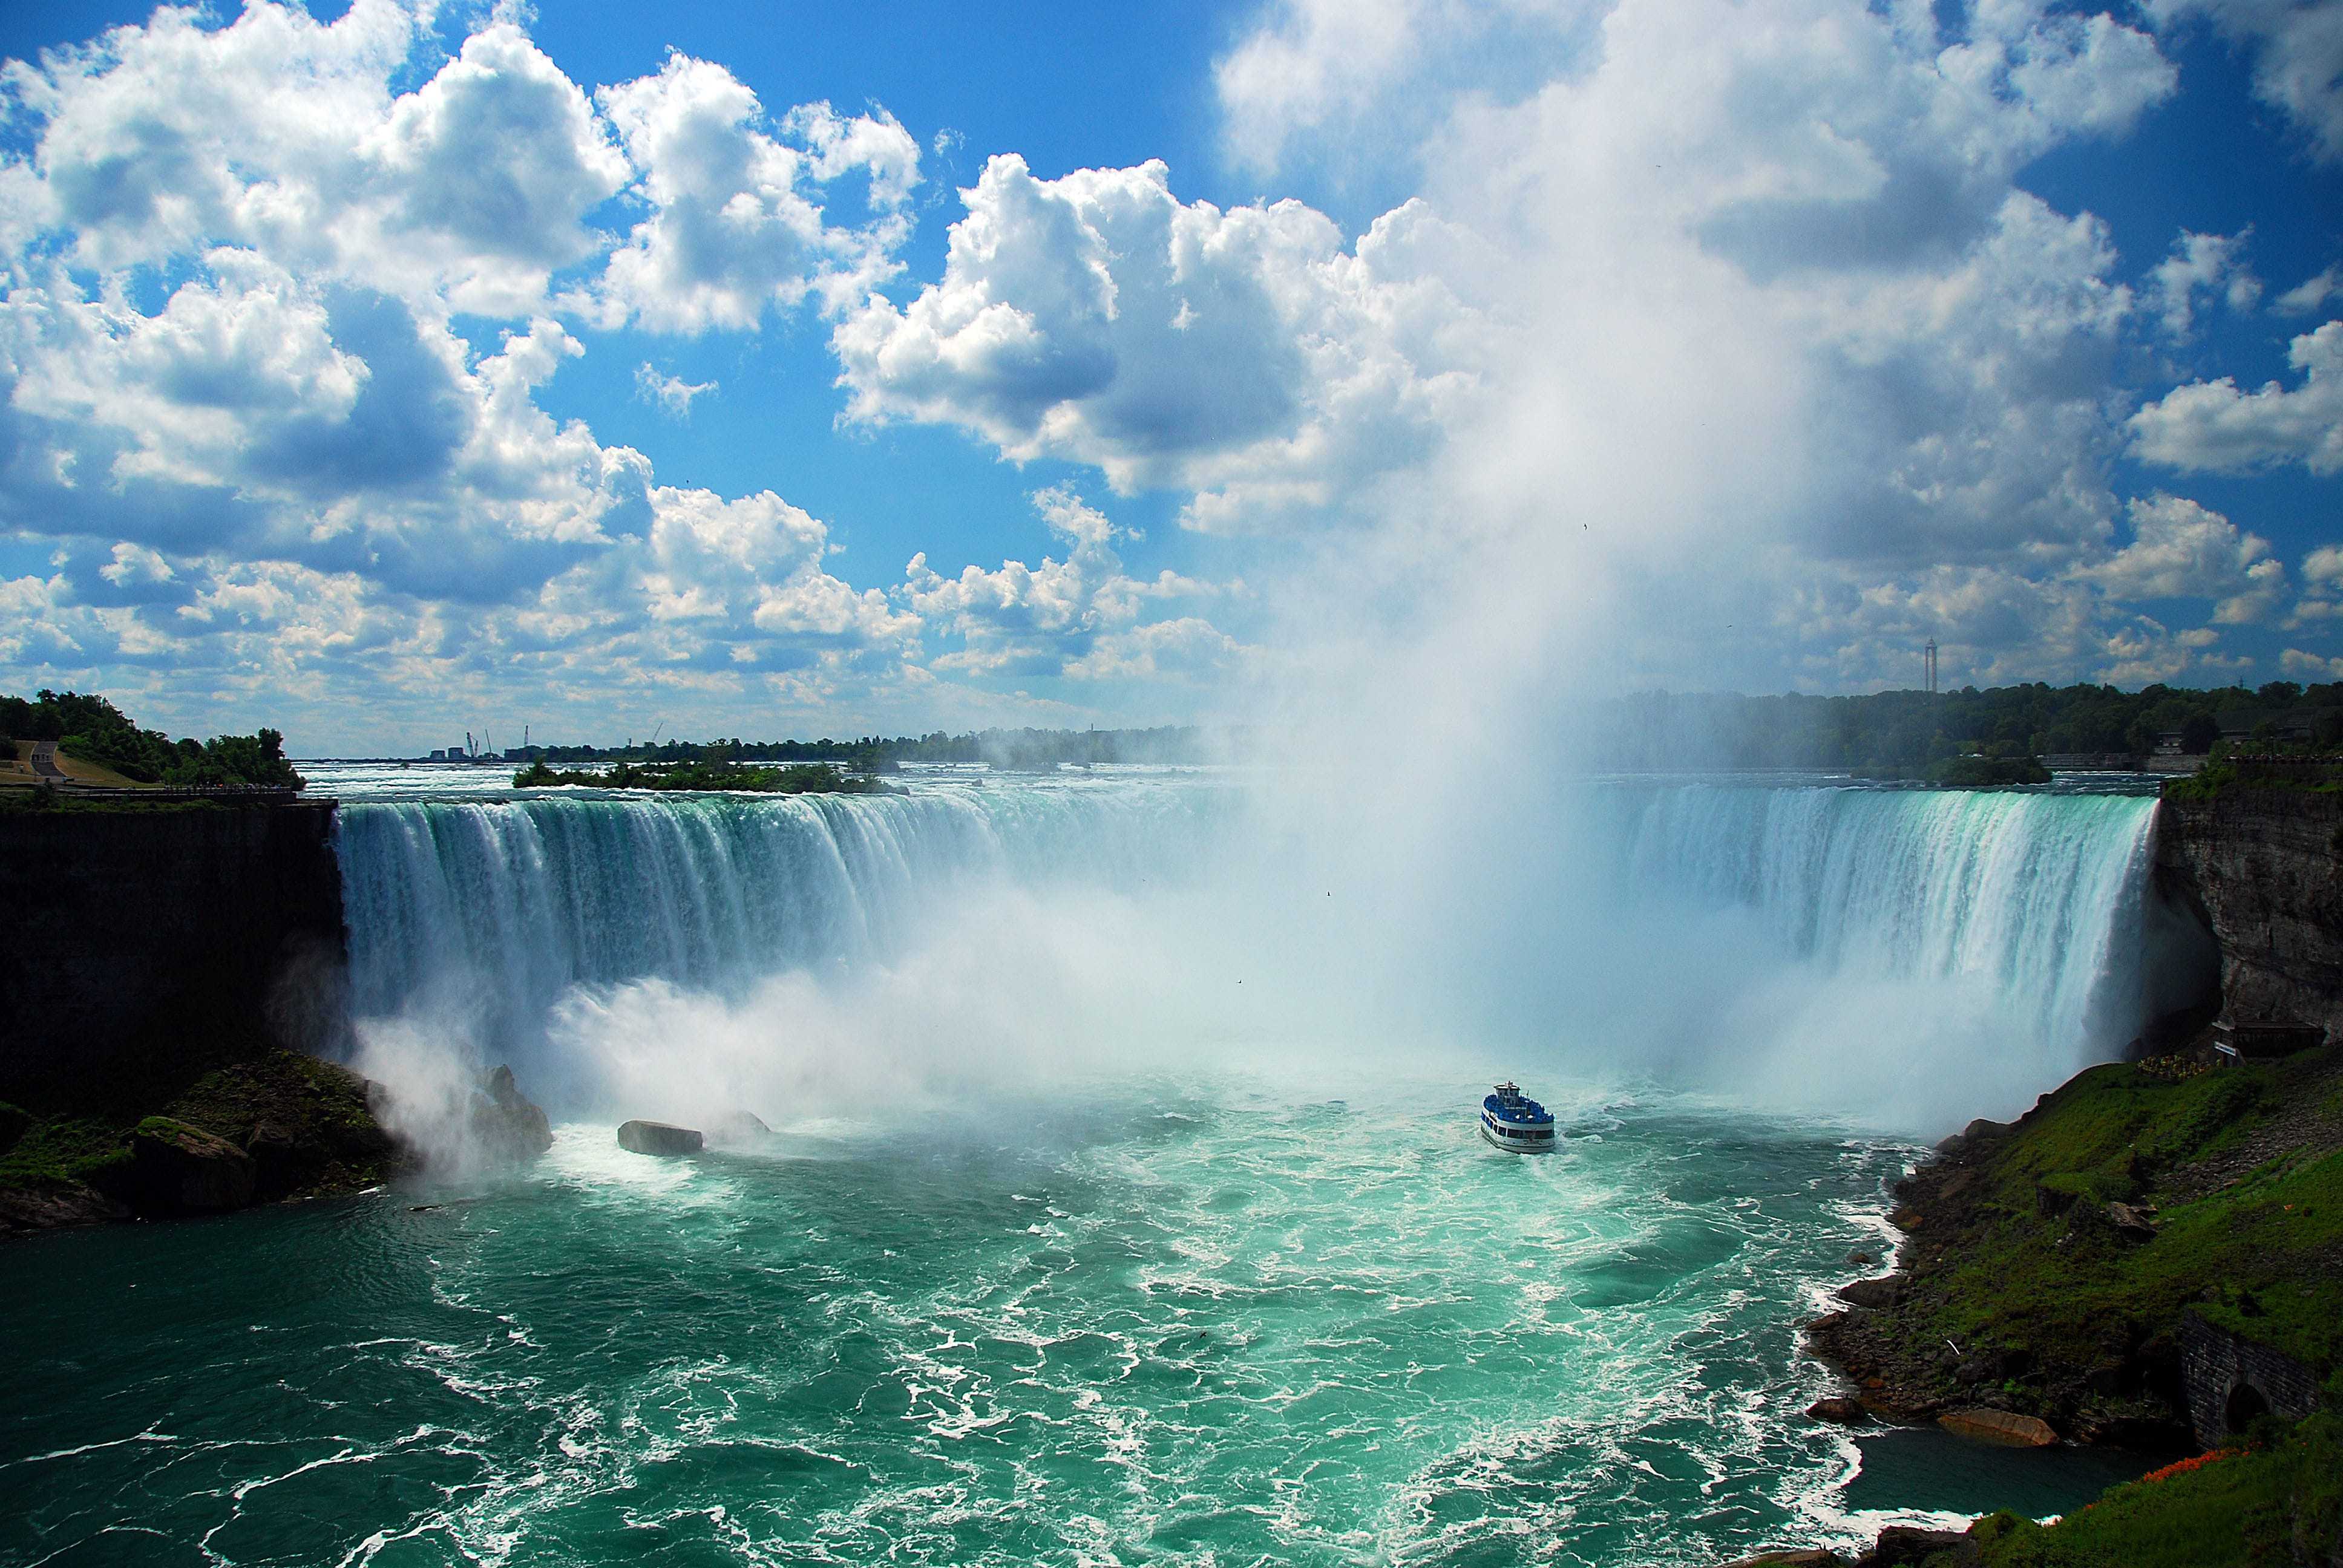 Niagara Falls Wallpaper Image Photo Picture Background